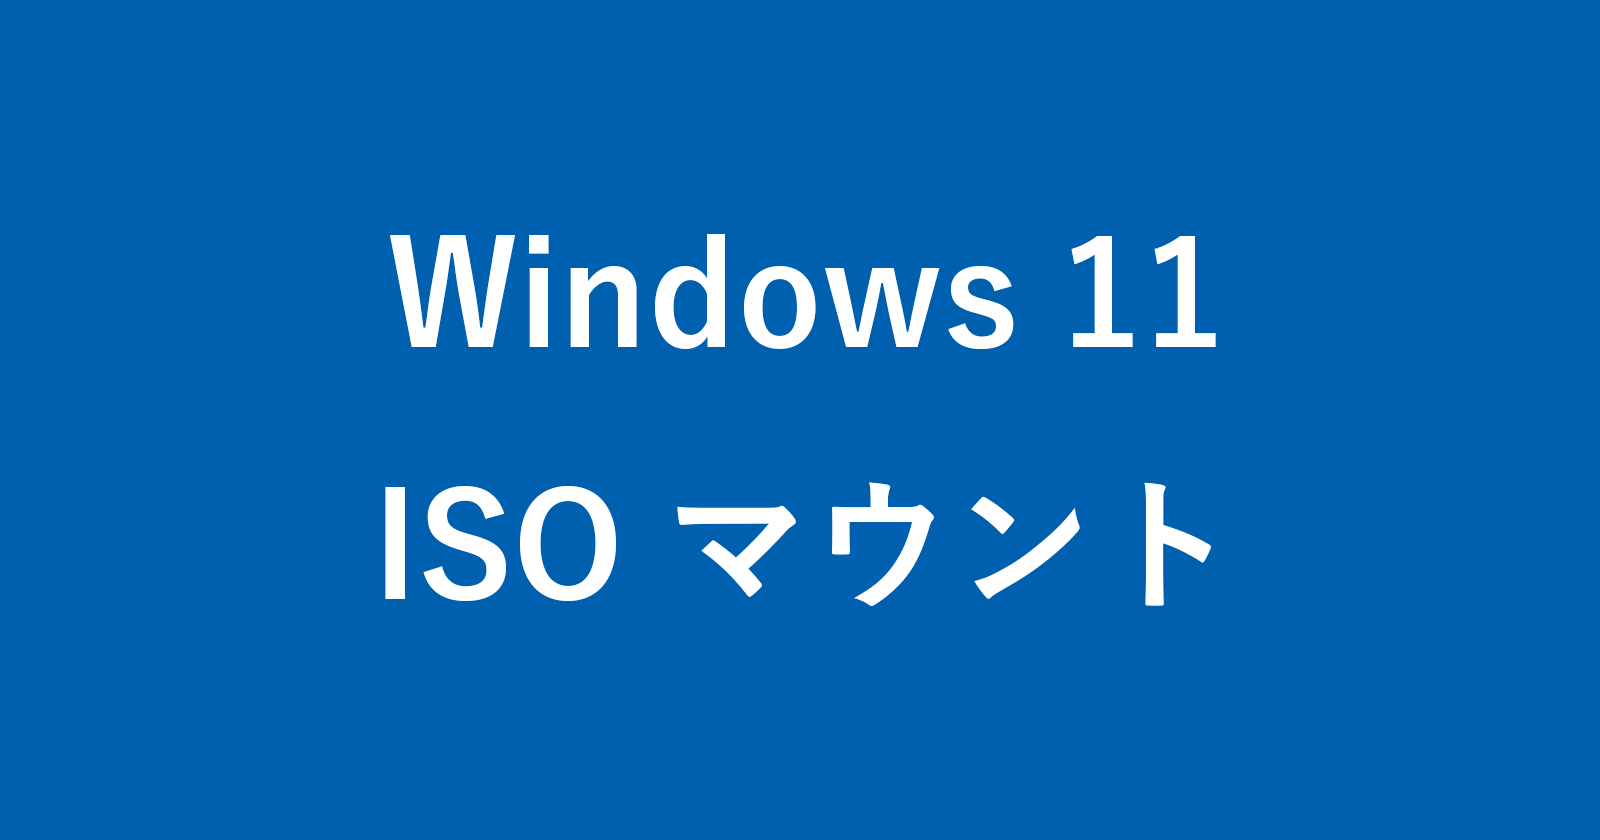 windows 11 mount iso file